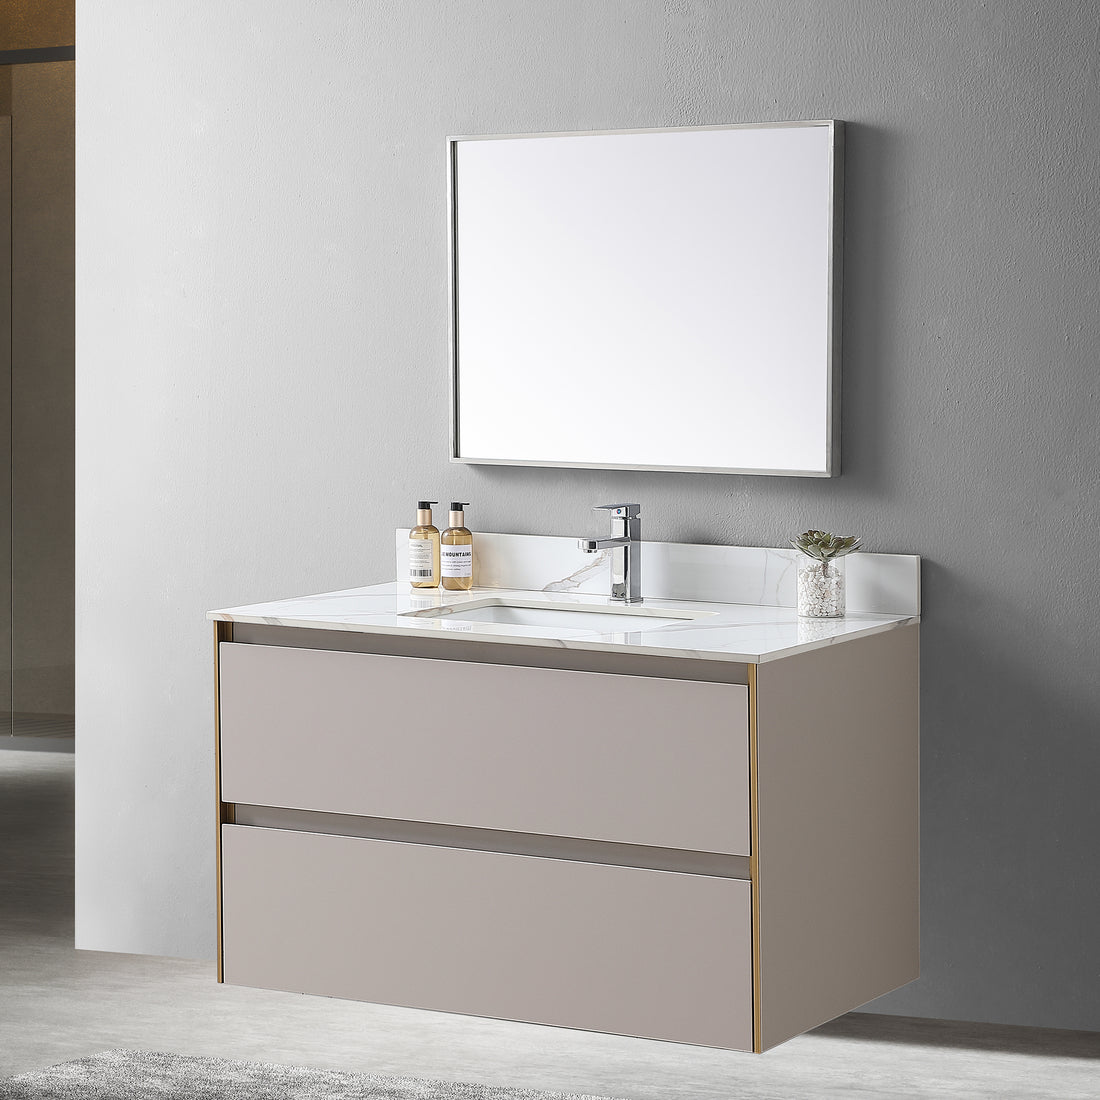 Montary 43x 22 inch bathroom stone vanity carrara